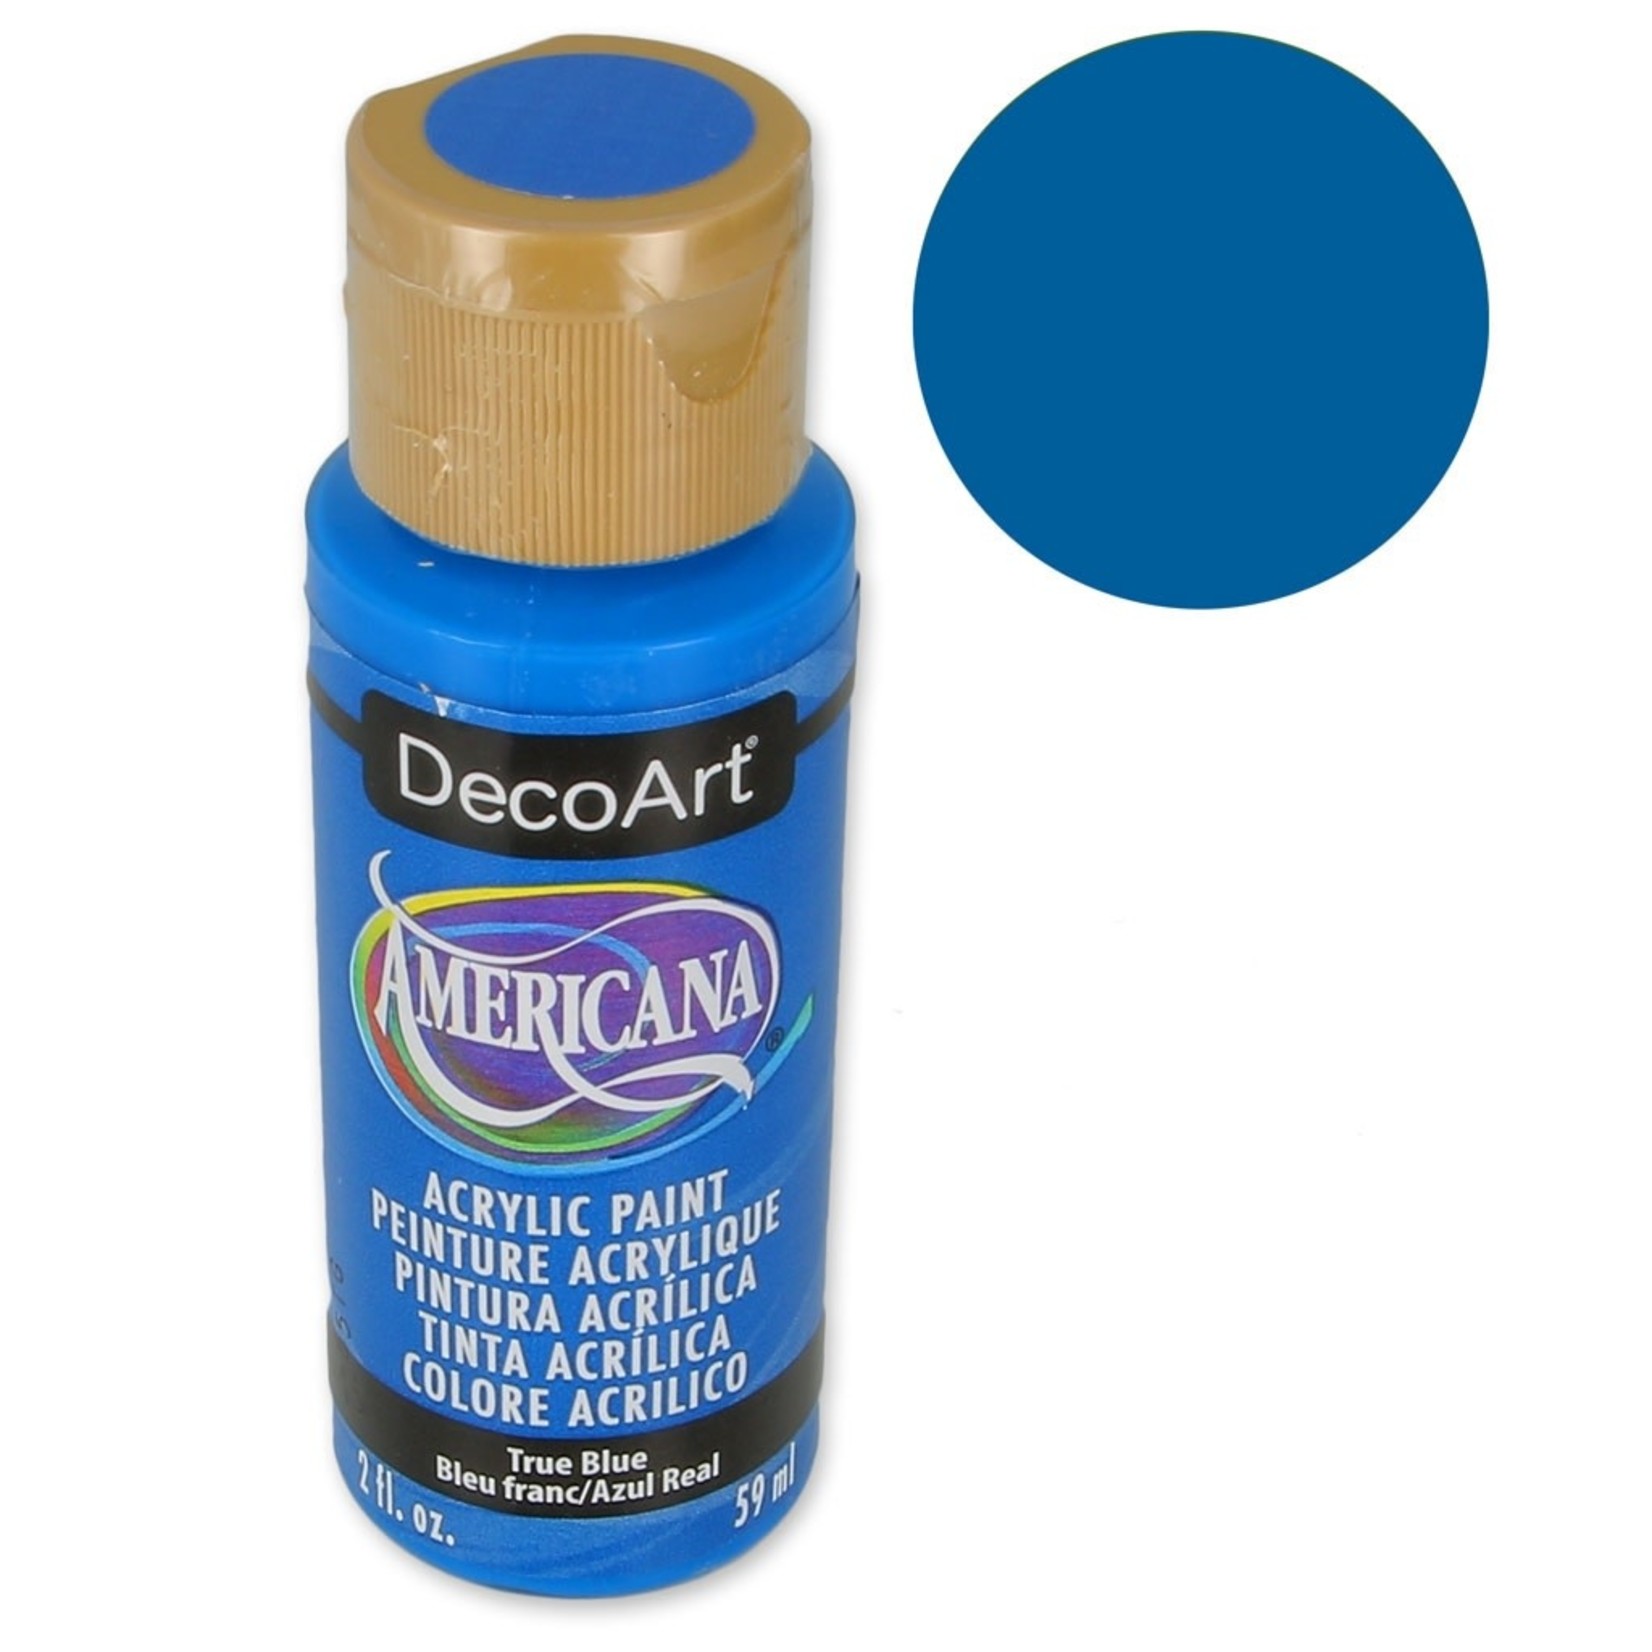 DecoArt Americana - Acrylic Paint - True Blue